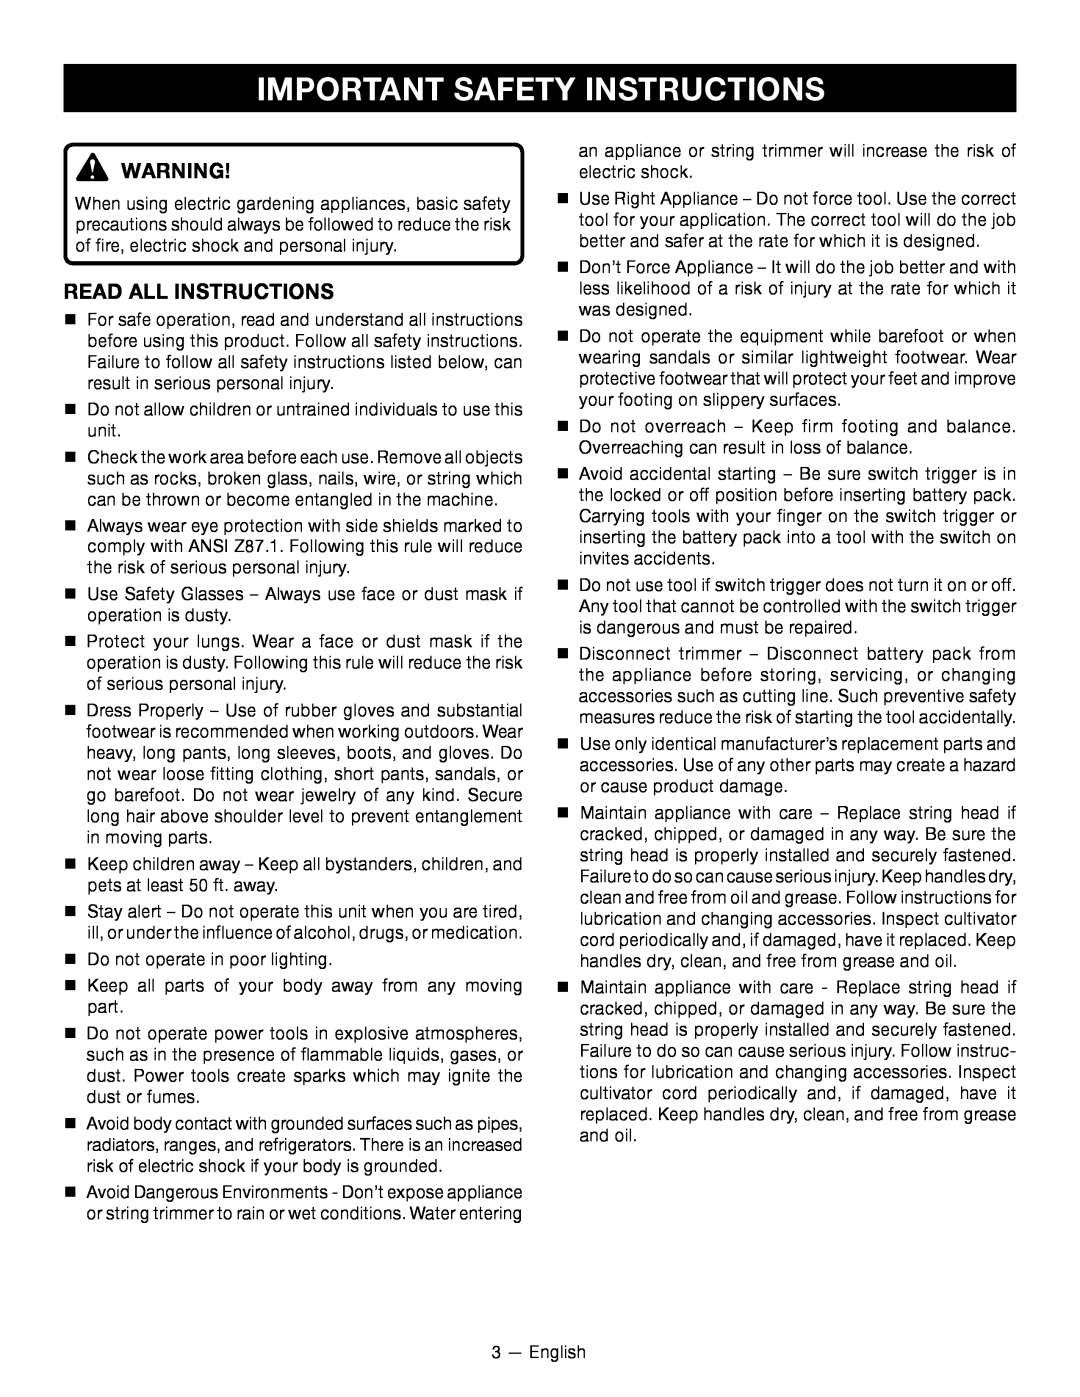 Ryobi RY24200 manuel dutilisation Important Safety Instructions, read all instructions 